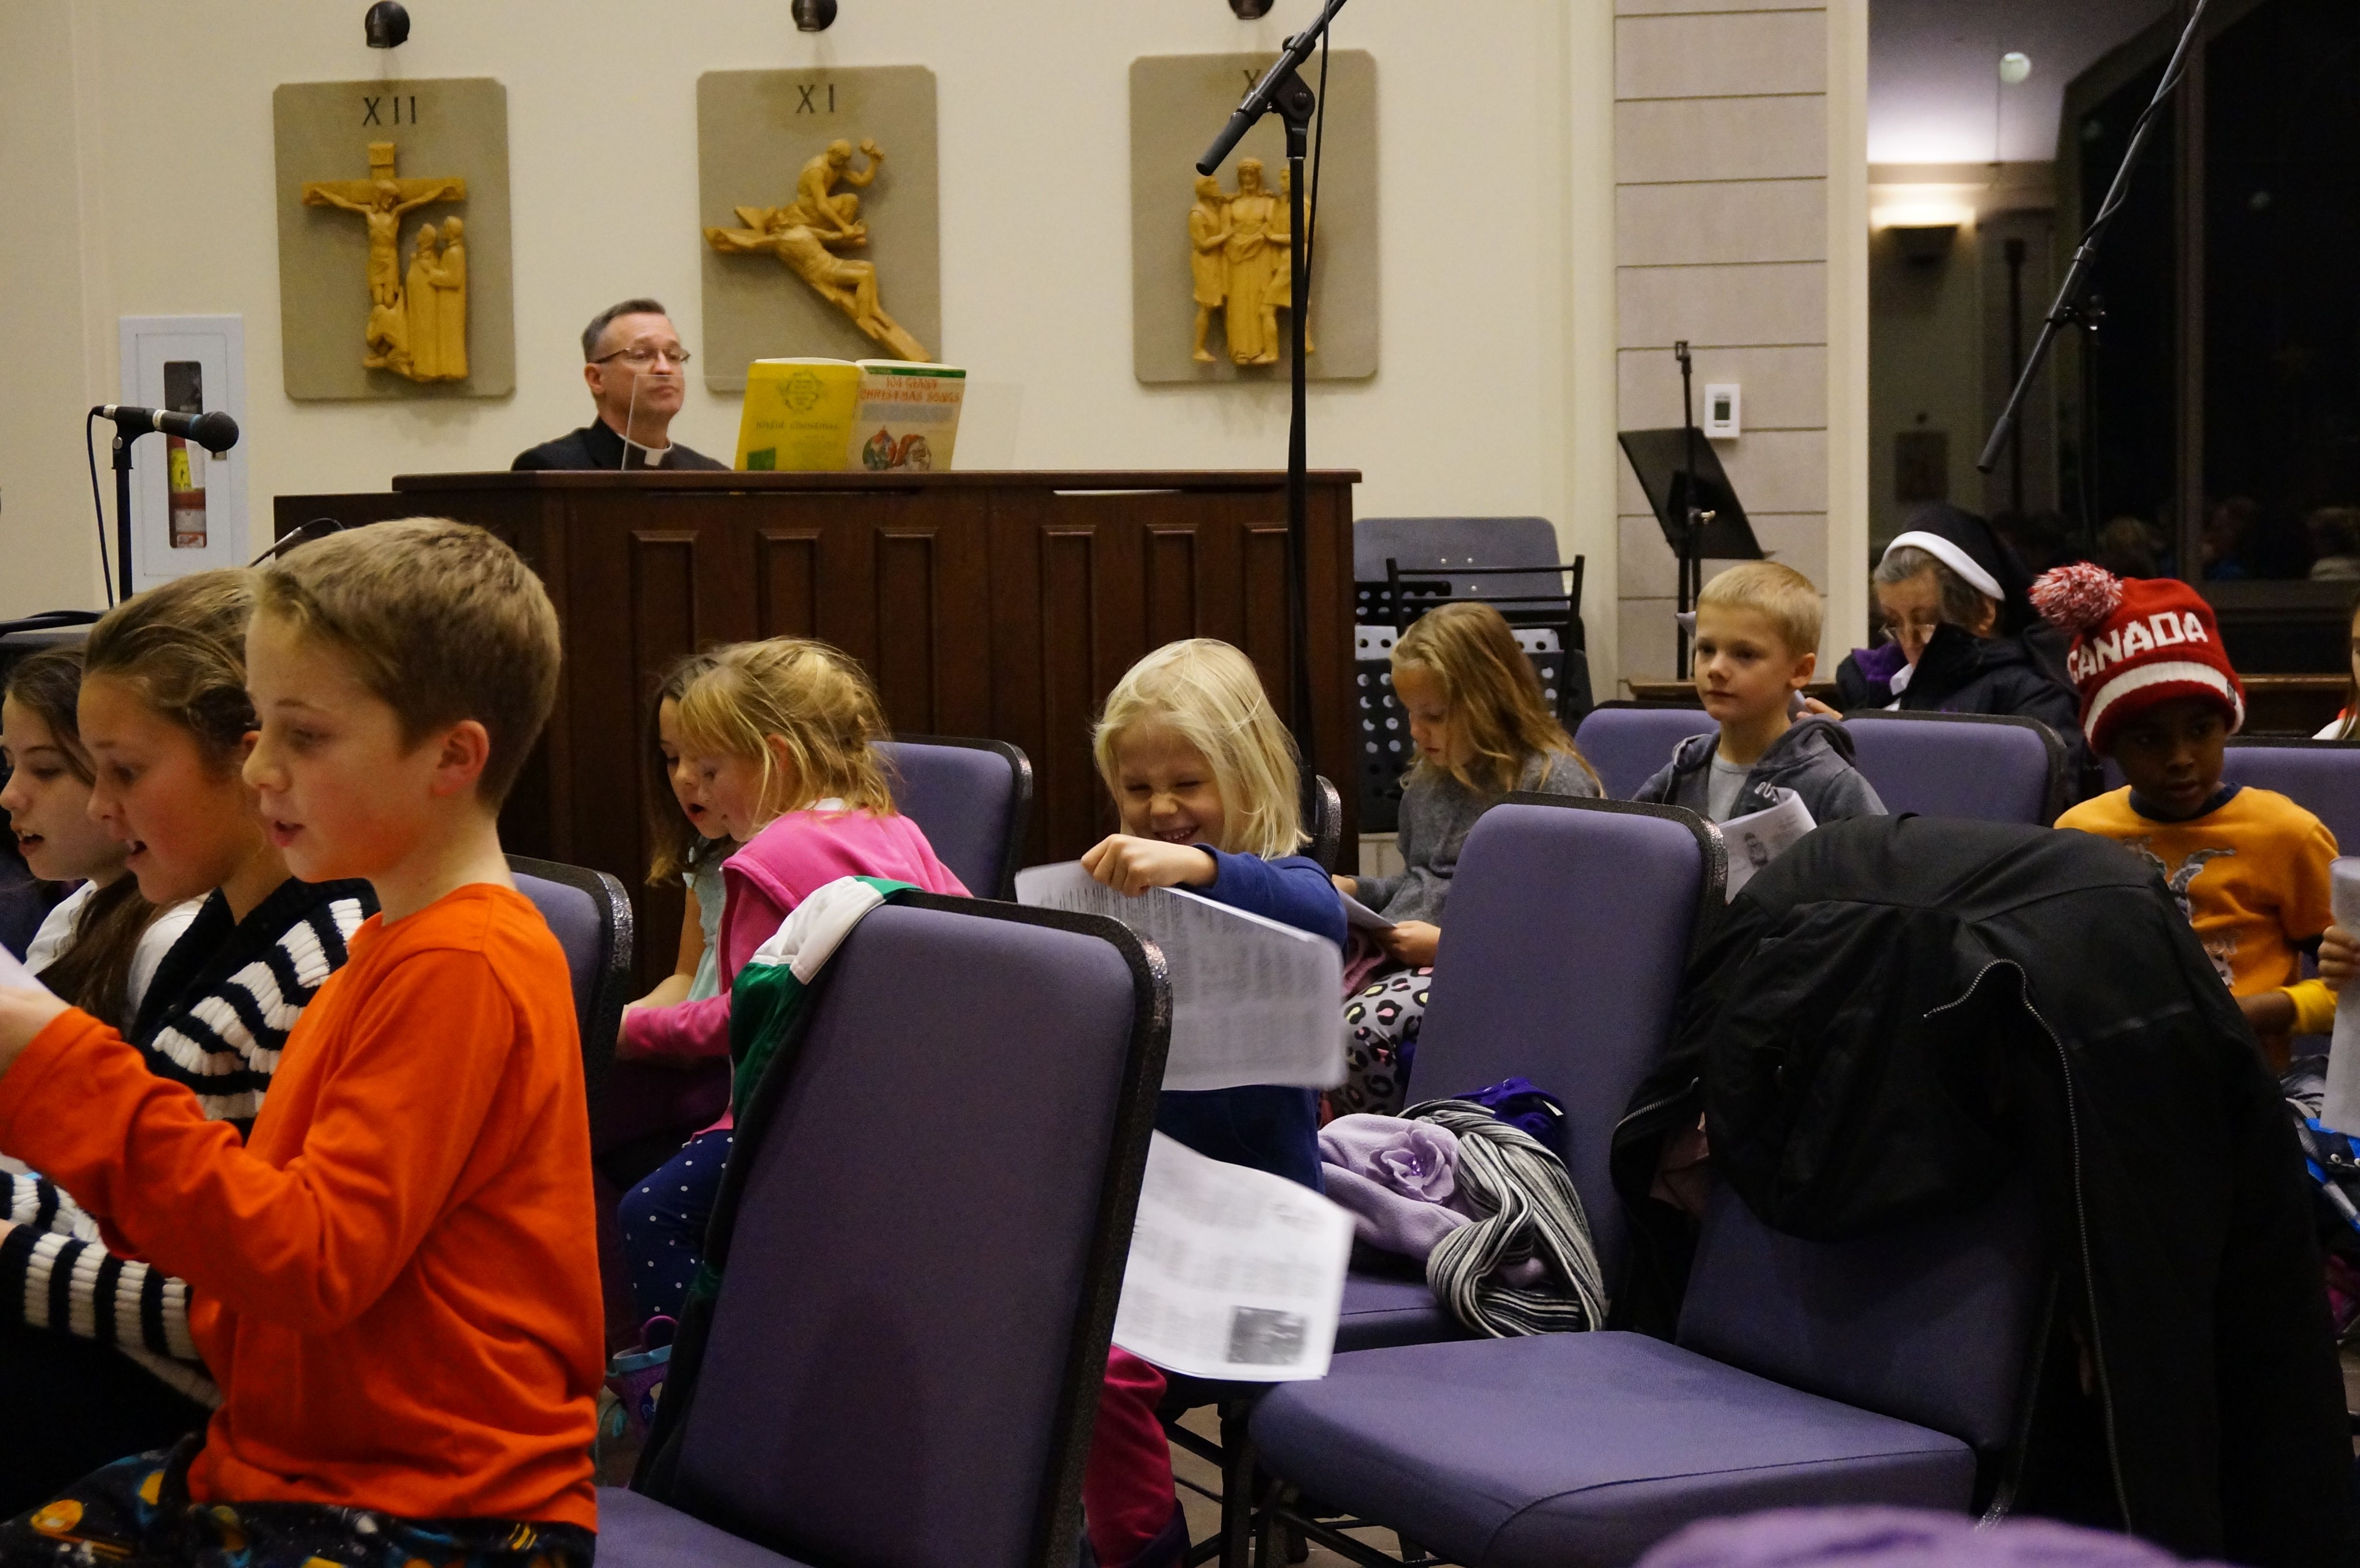 Hymning away with Fr. Lobsinger at the organ!